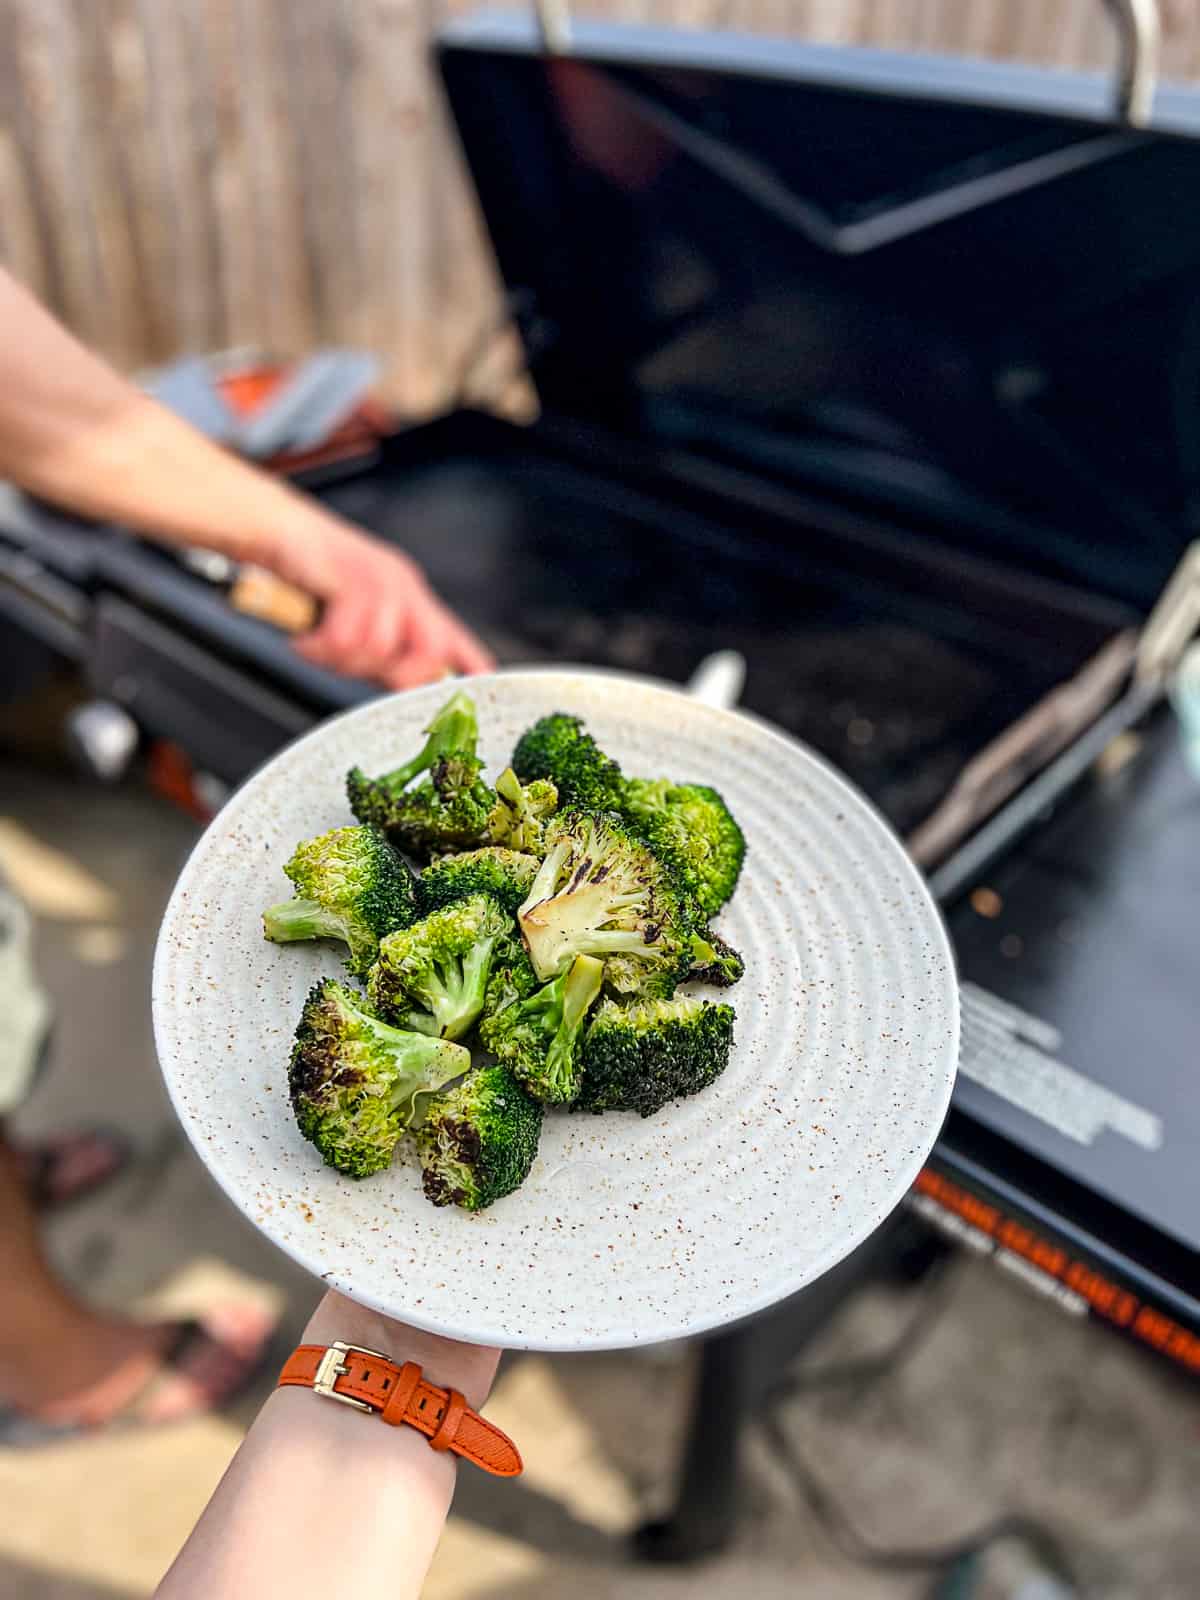 Holding Griddled Broccoli Recipe in front of Traeger Flatrock Griddle Grill